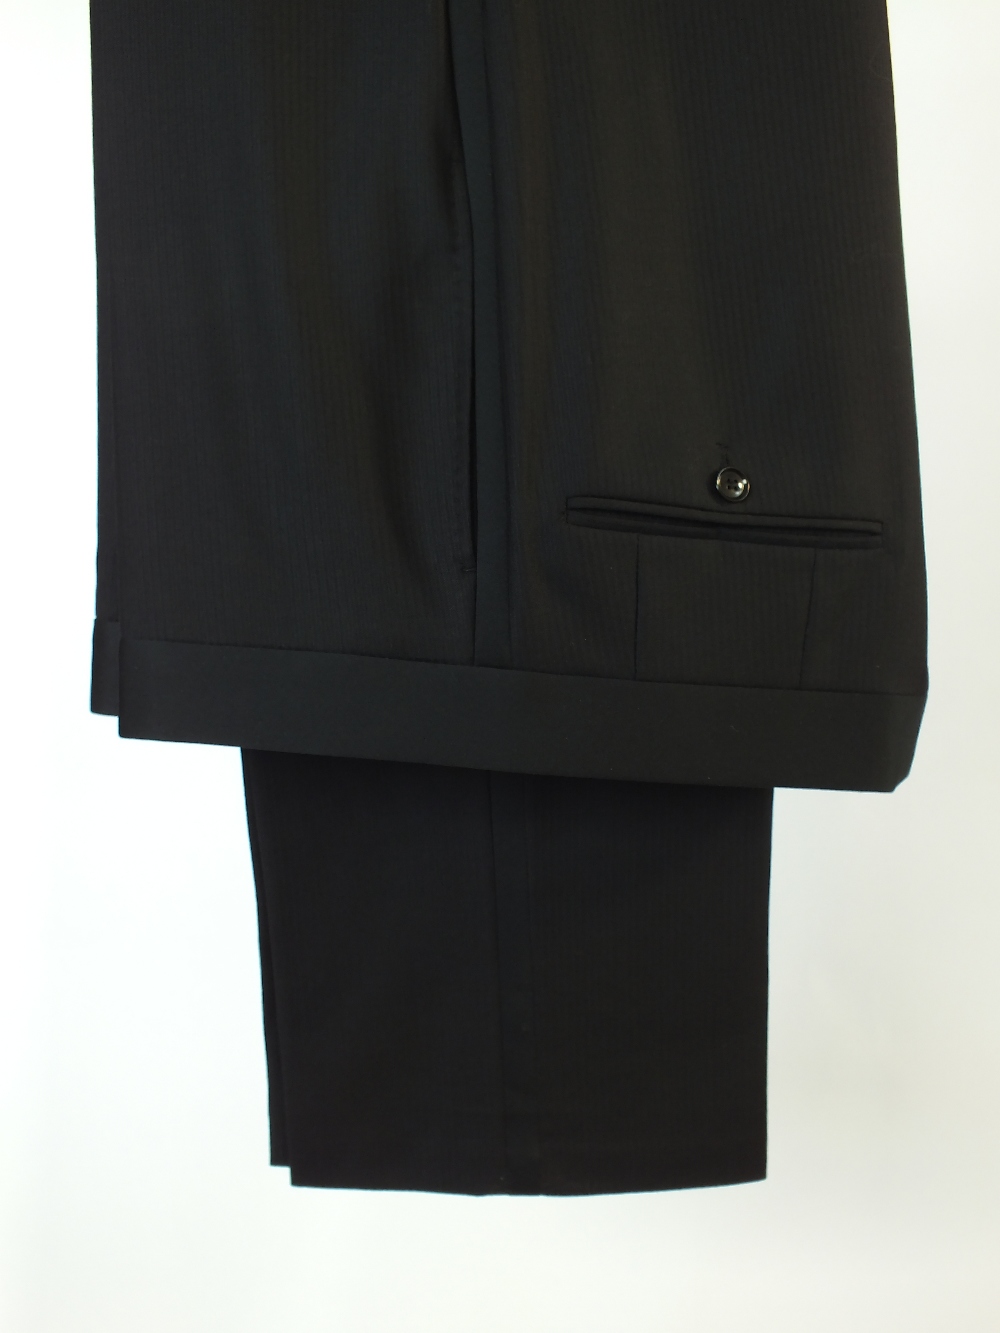 A Pal Zileri Ceromonia dinner suit, black, velvet, satin lower lapel, single vent, Italian size 52R, - Image 6 of 6